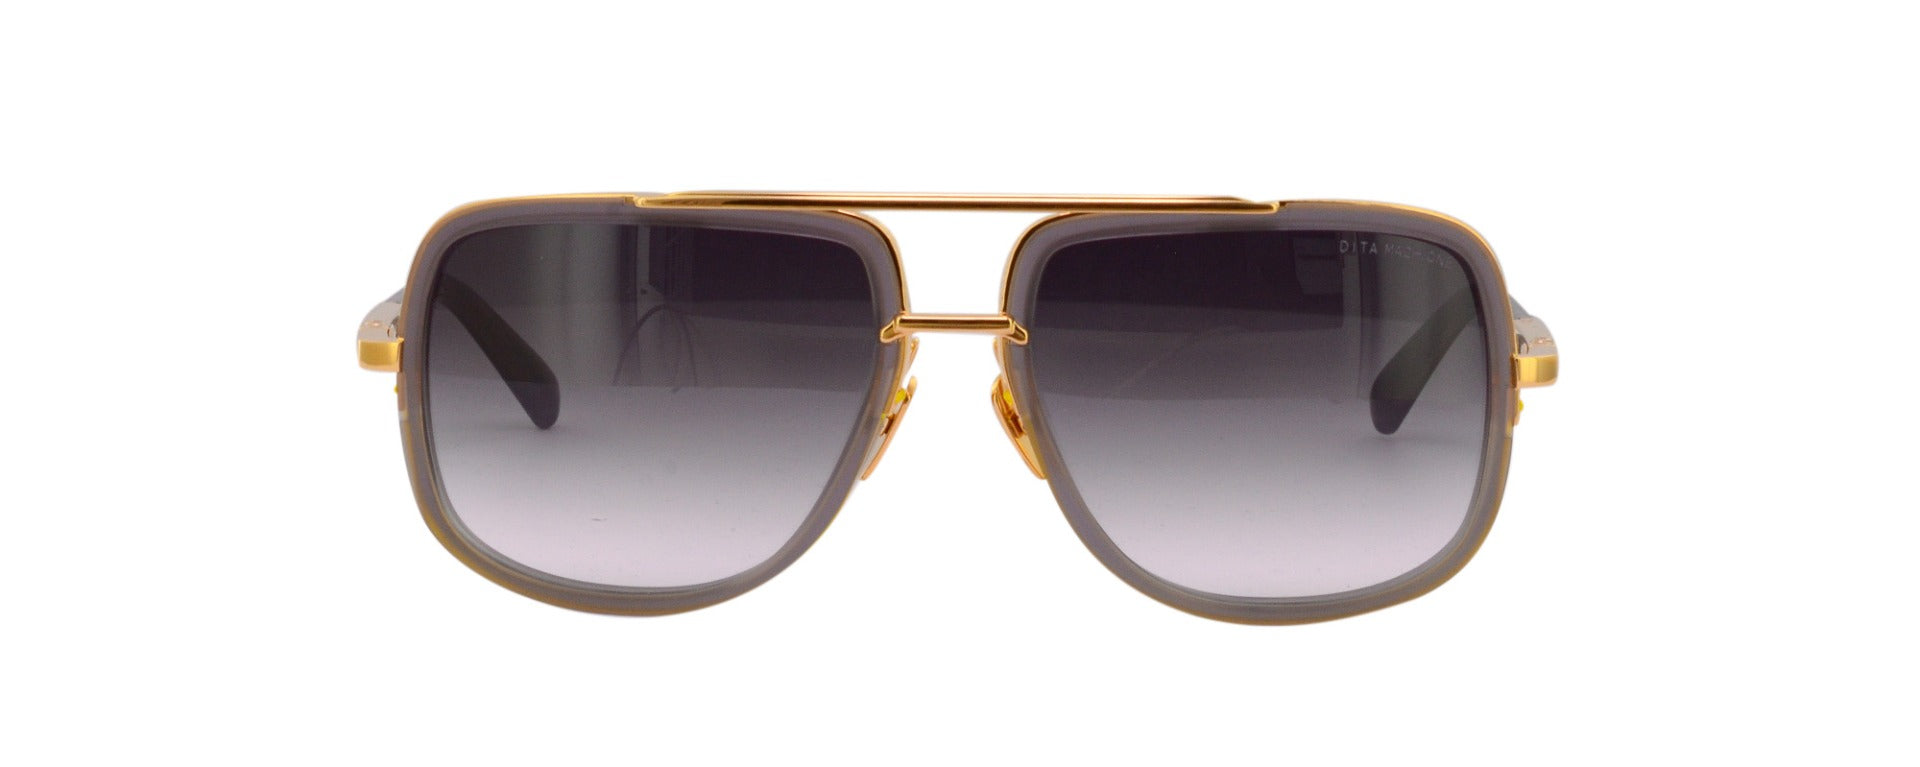 DITA MACH ONE DRX20300 Designer Dita Sunglasses Men For Men And Women Retro  Luxury Brand Eyewear With Box From Sunglasses_watch99, $59.26 | DHgate.Com